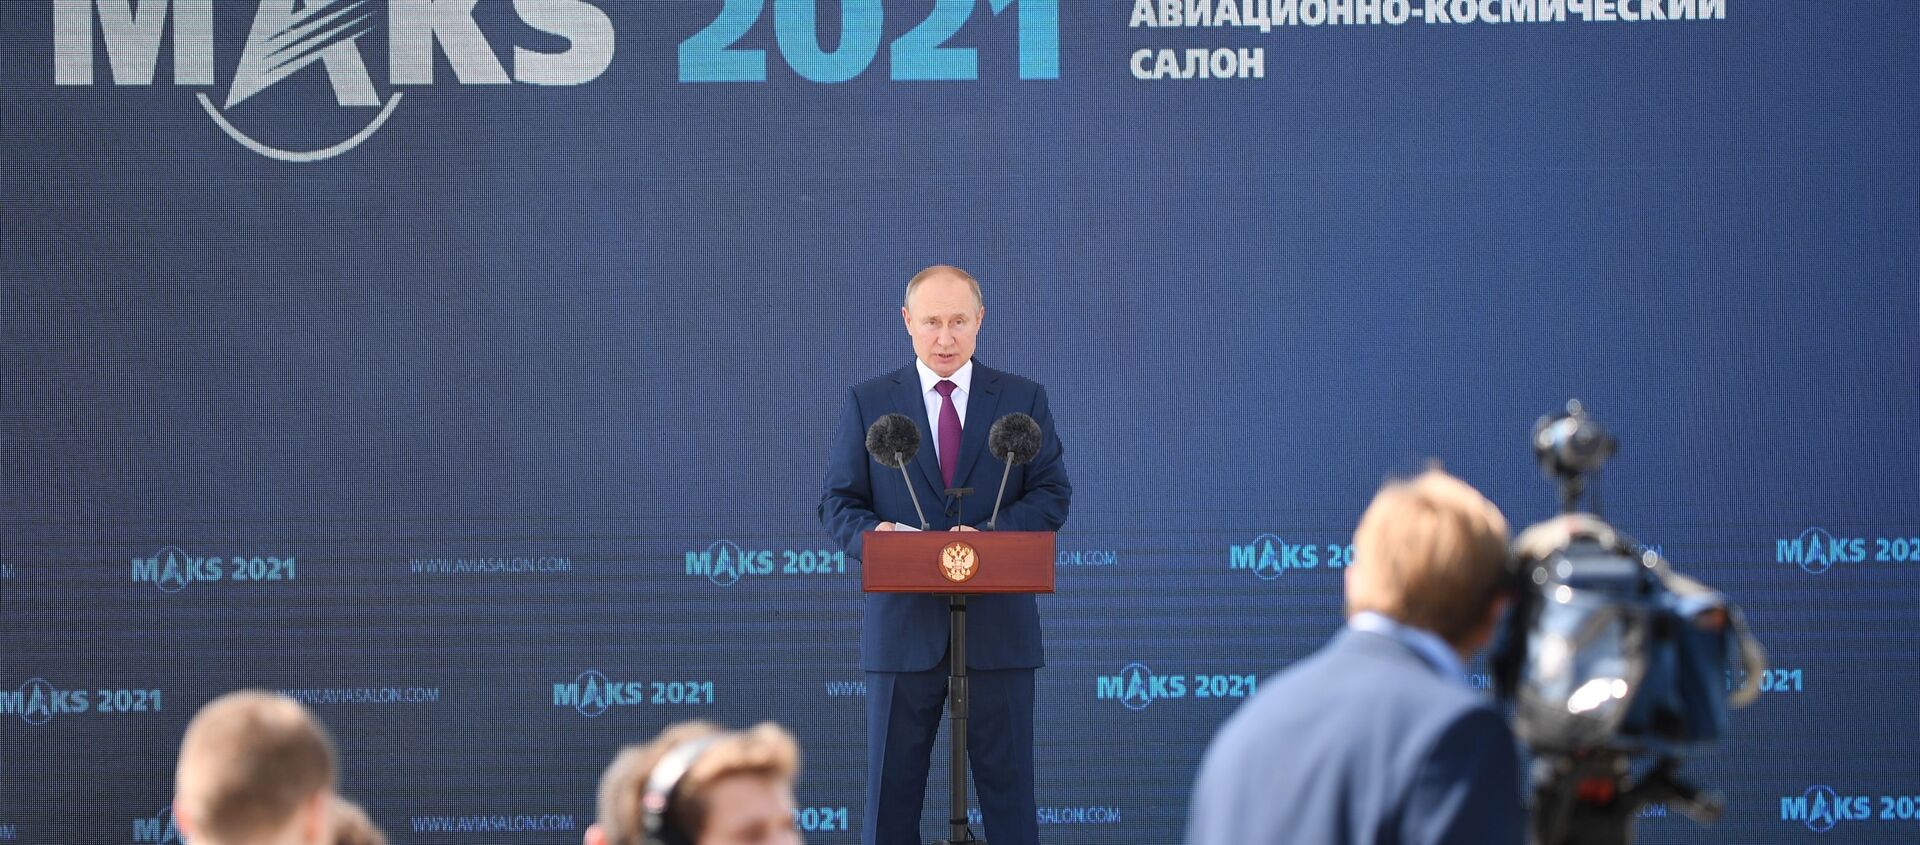 Tổng thống Nga Vladimir Putin dự nghi lễ khai mạc MAKS-2021 - Sputnik Việt Nam, 1920, 20.07.2021